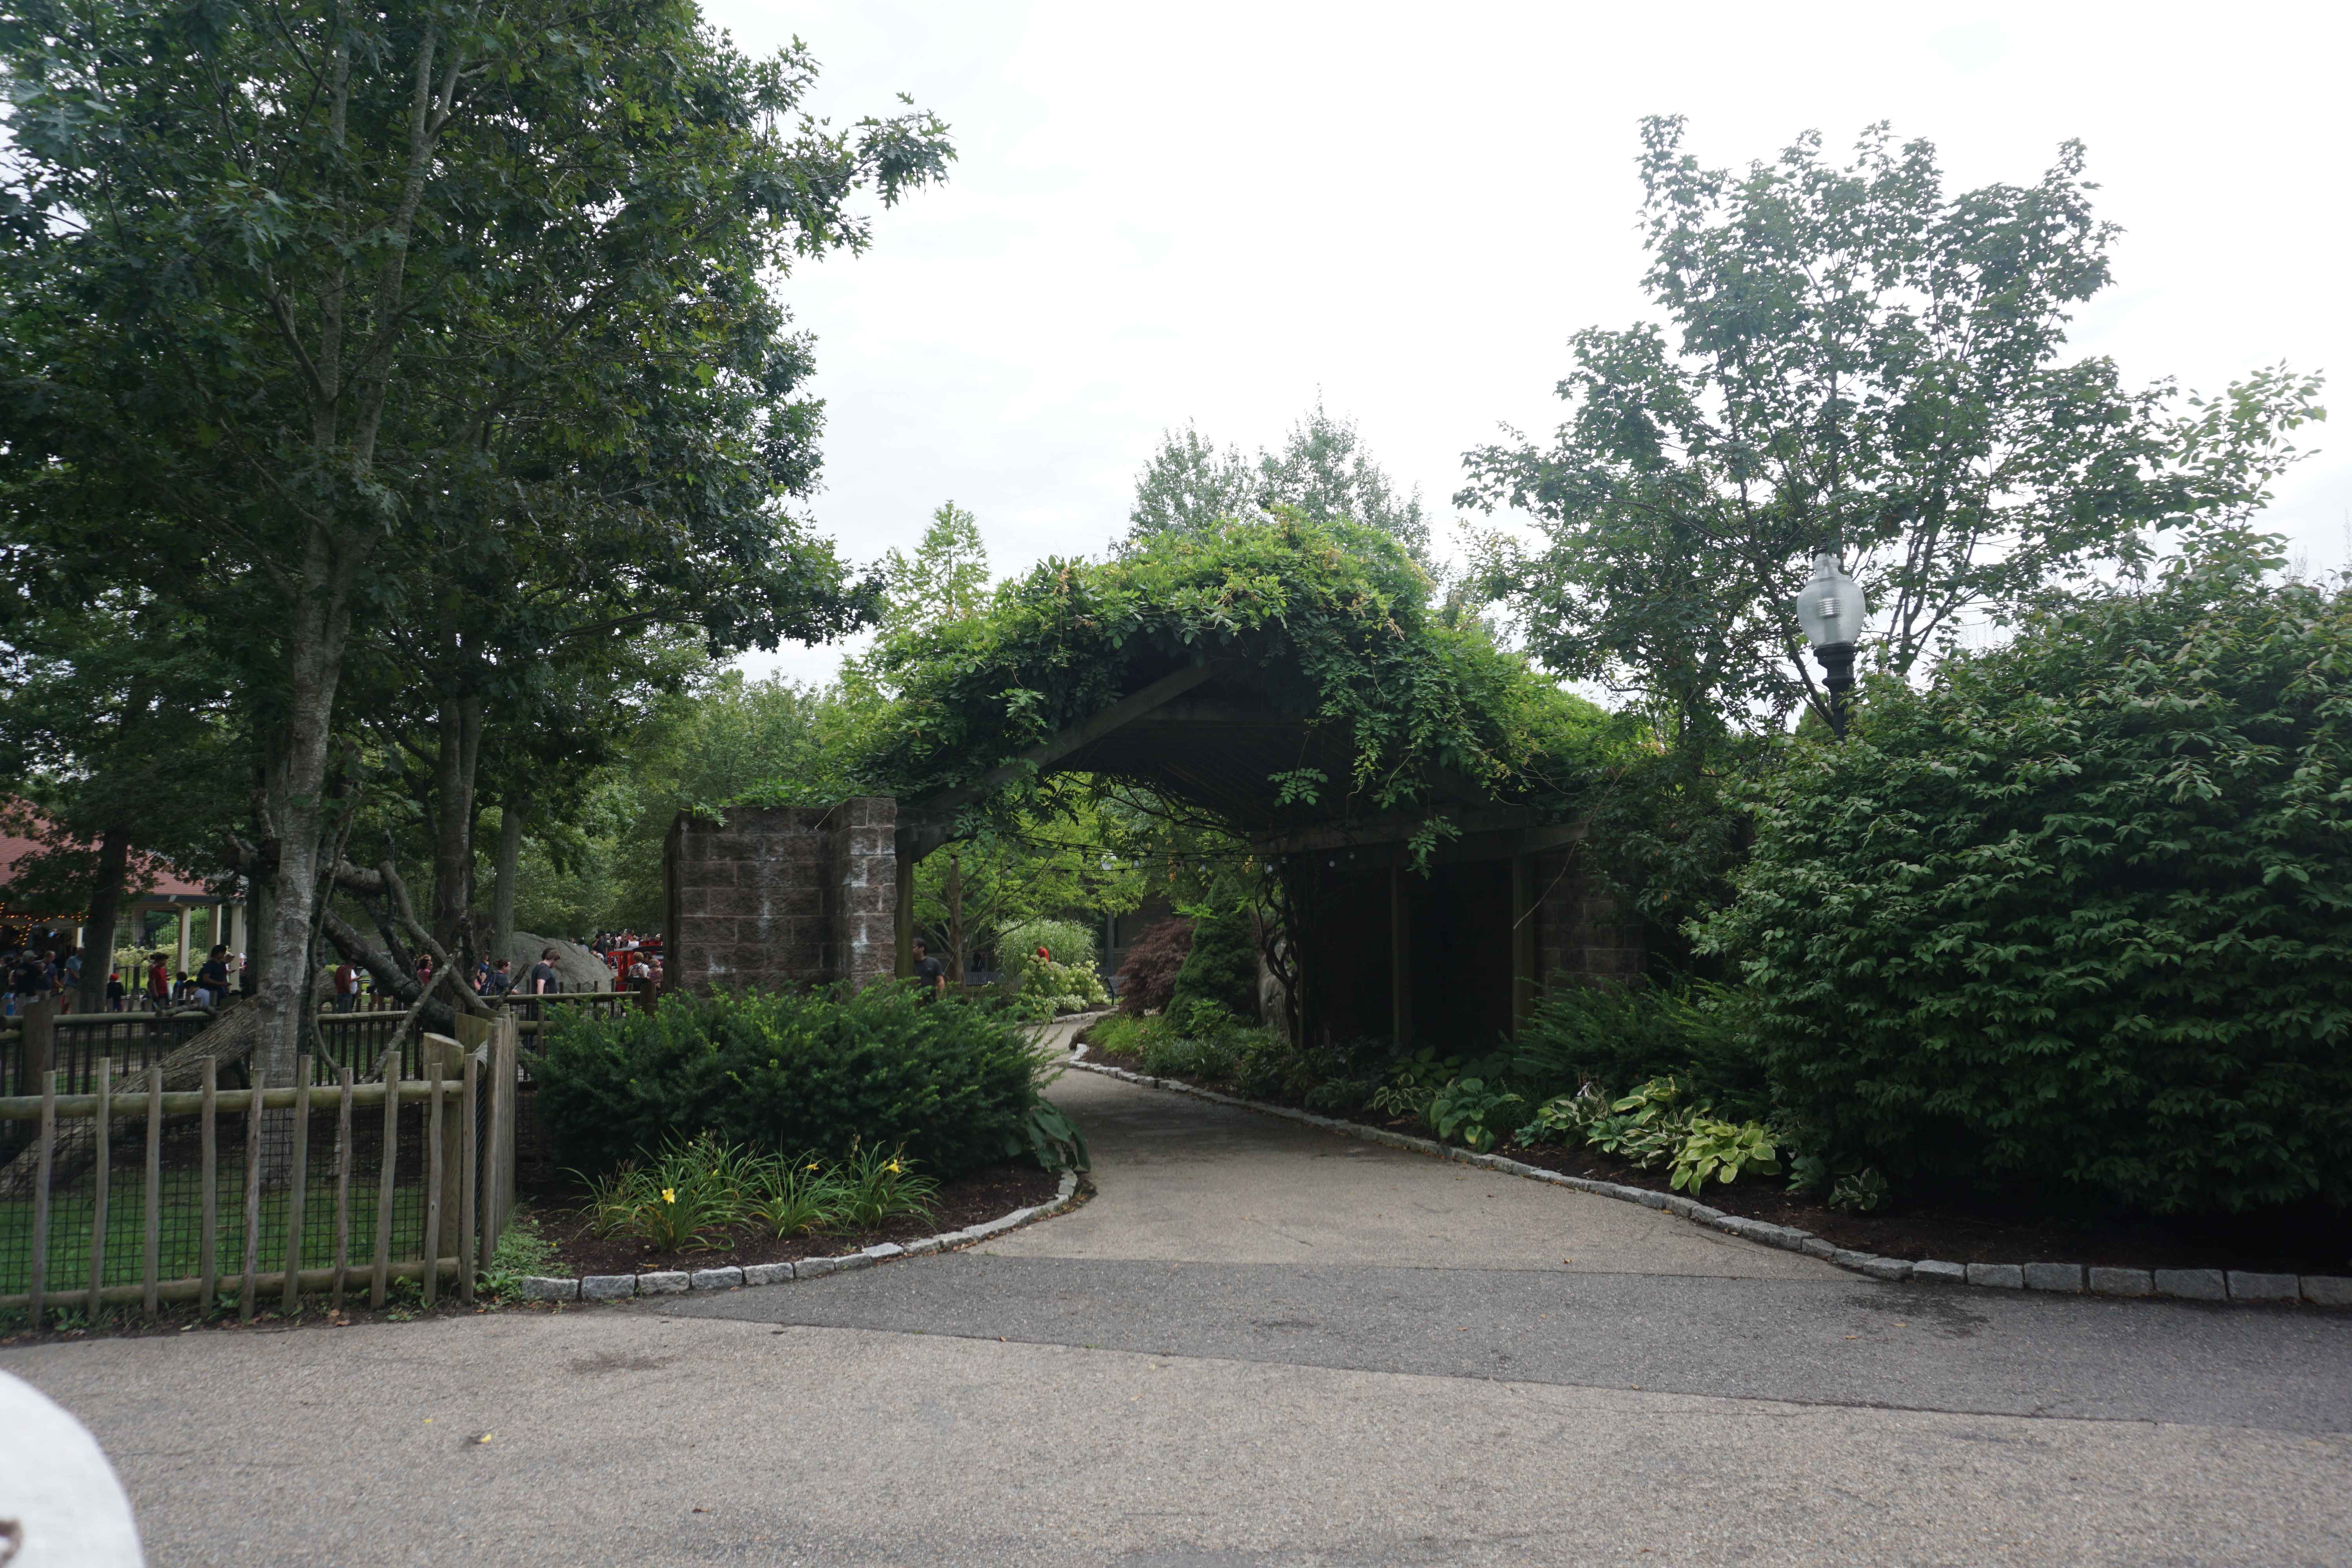 Exploring Massachusetts: August 23rd 2019: Buttonwood Park Zoo, New Bedford